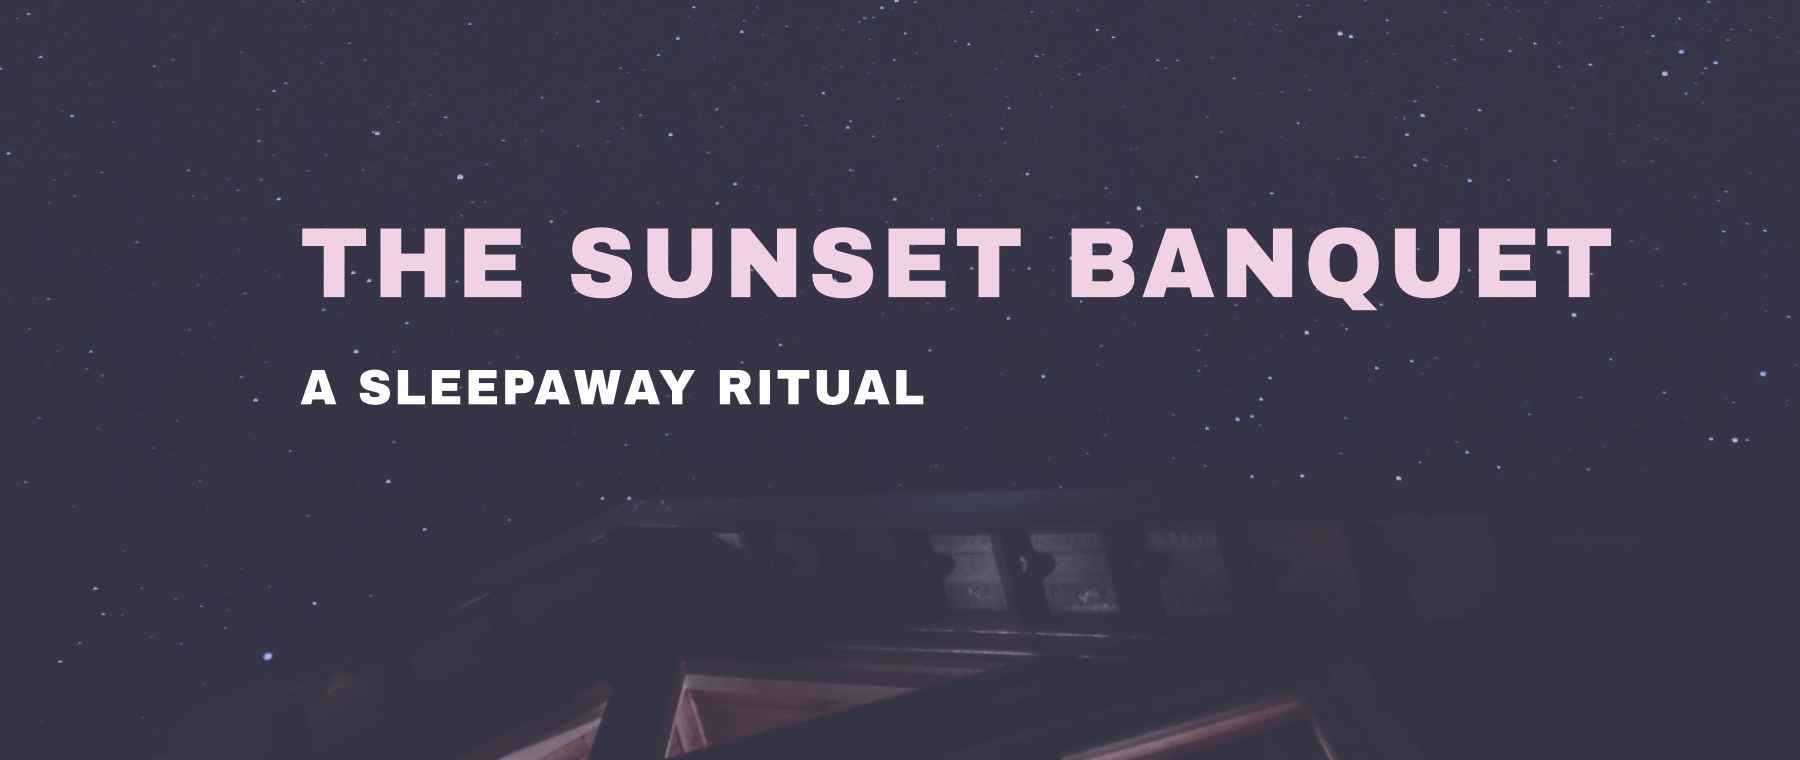 The Sunset Banquet (Sleepaway Ritual)